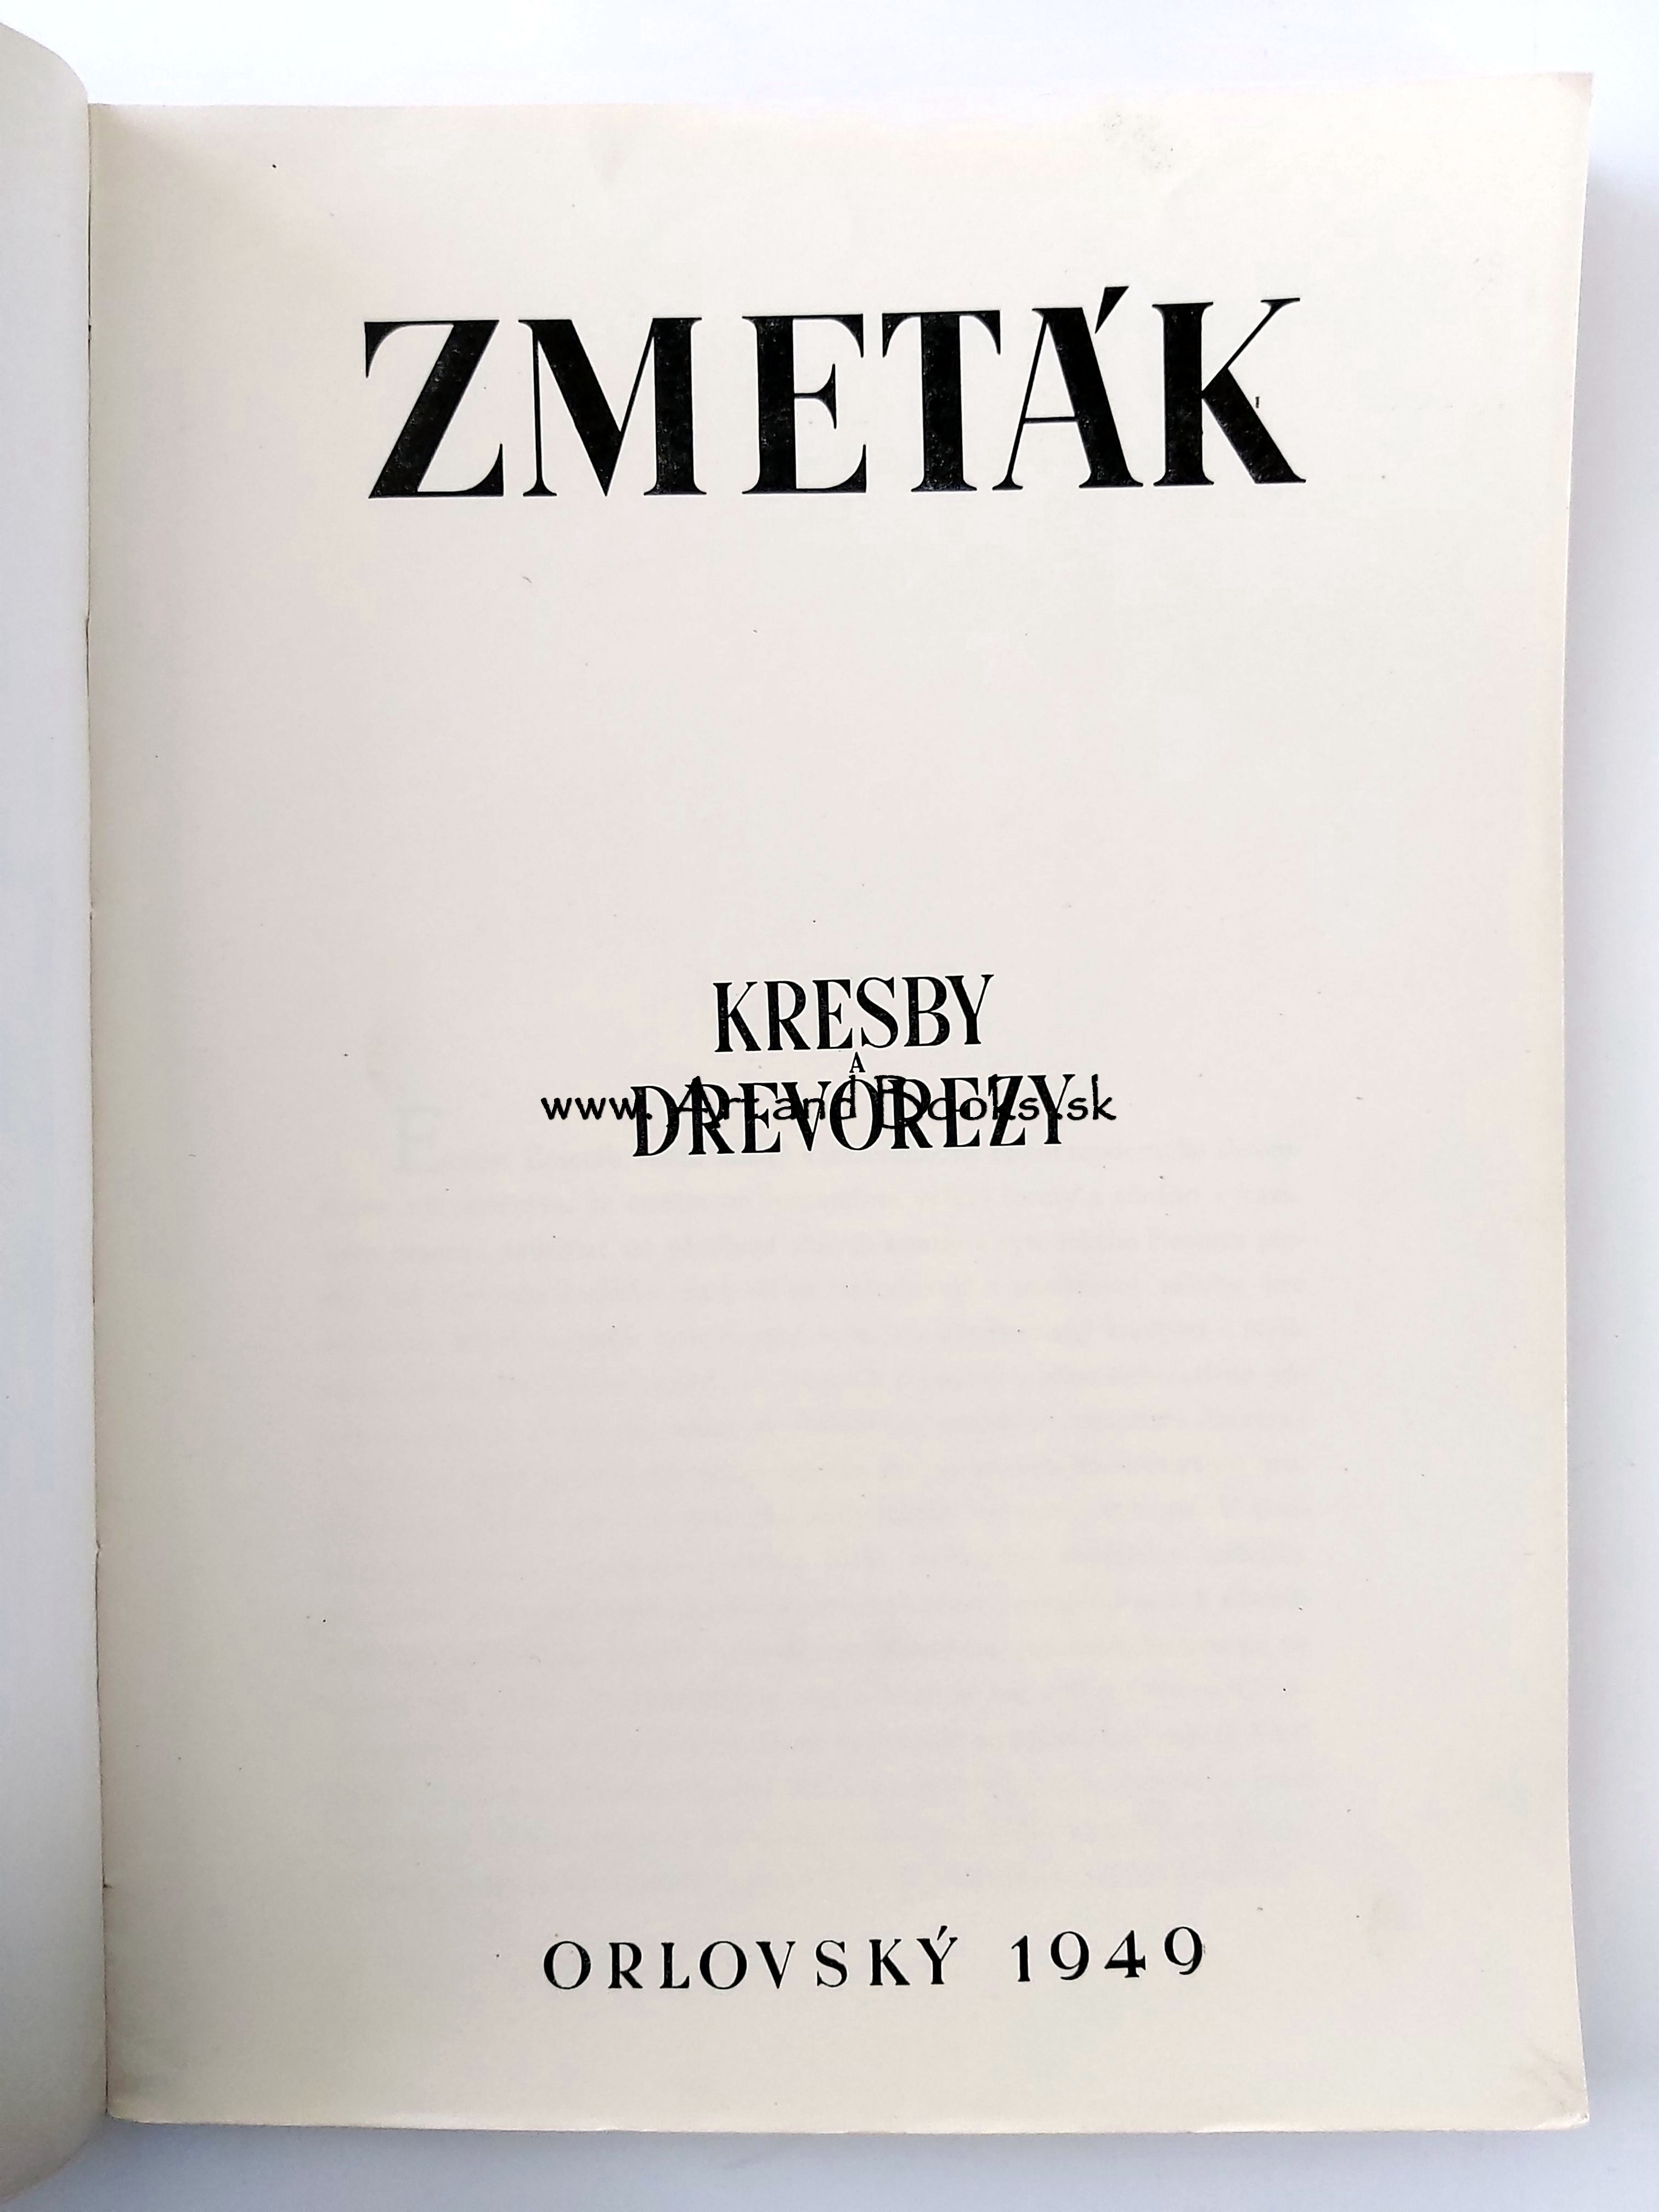 ERNEST ZMETÁK - KRESBY A DREVOREZY (1949) ● 153741